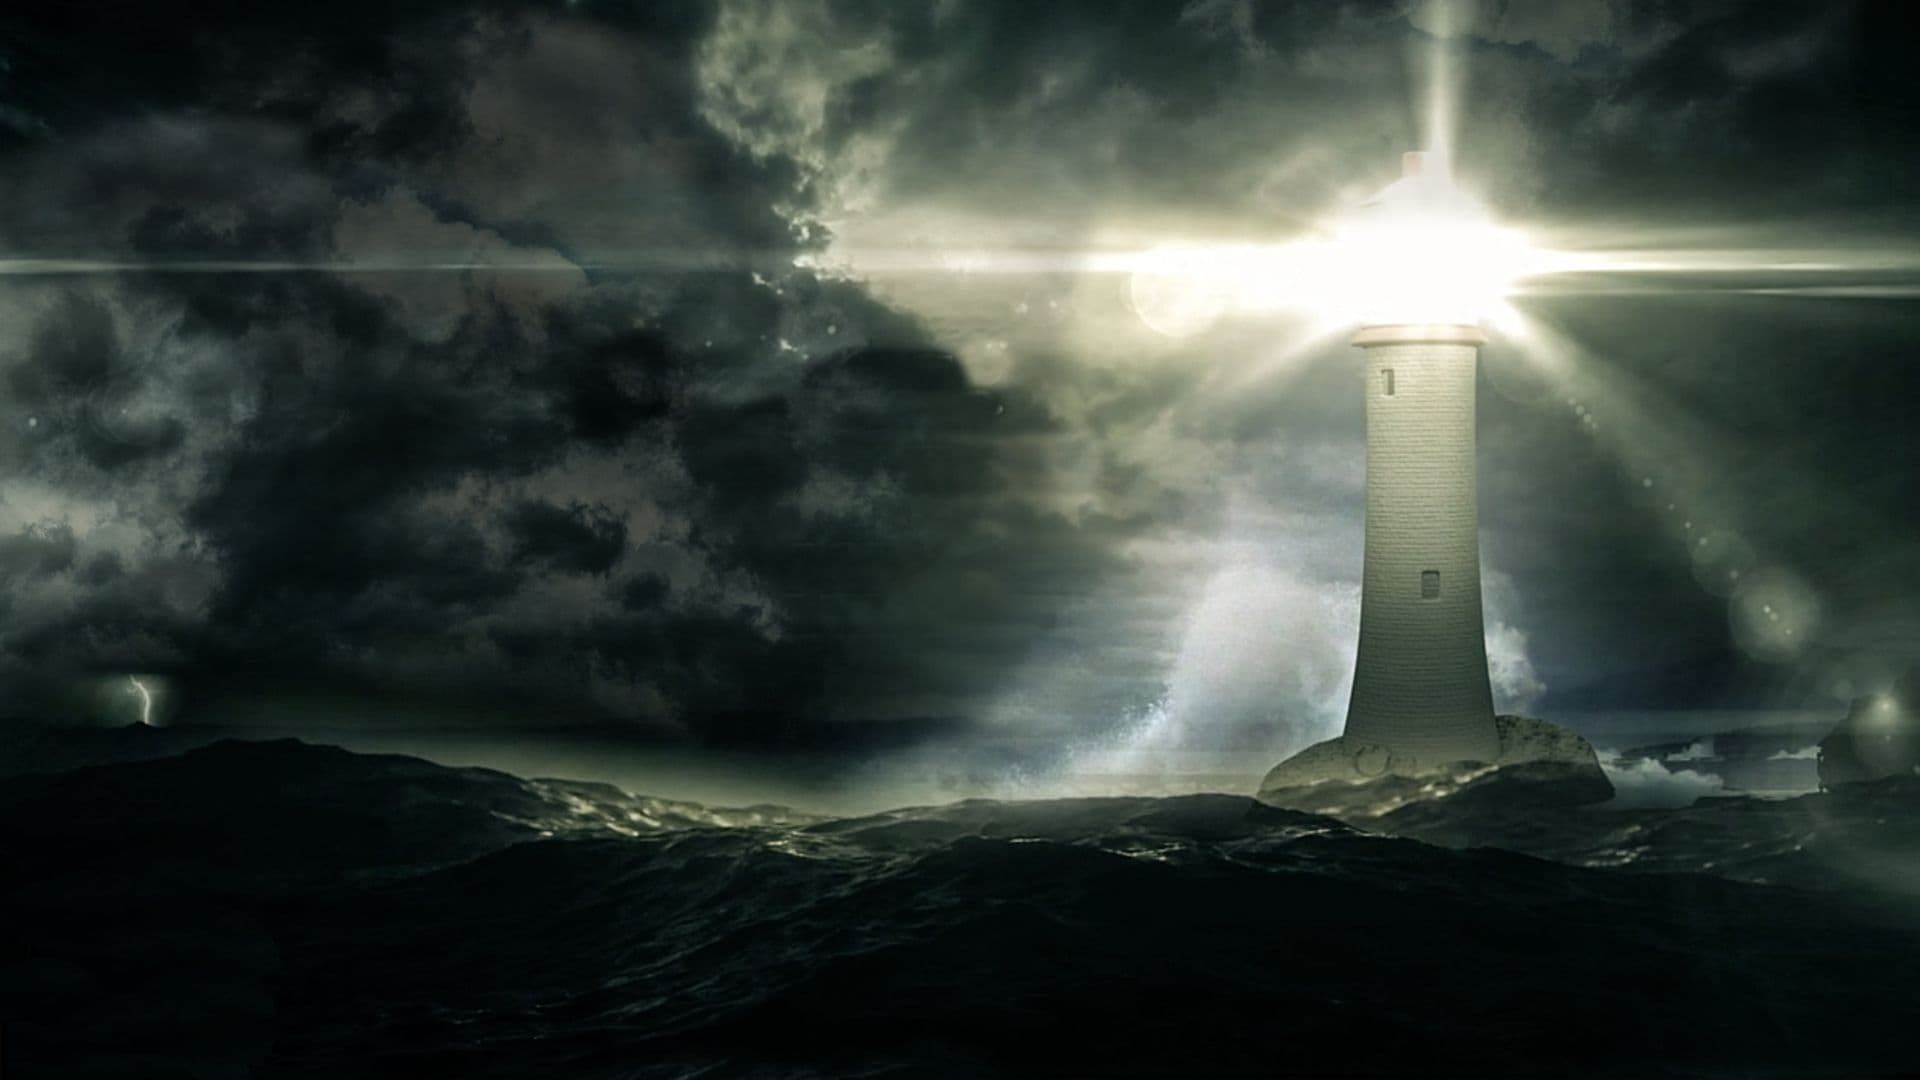 Secret Life of the Lighthouse background